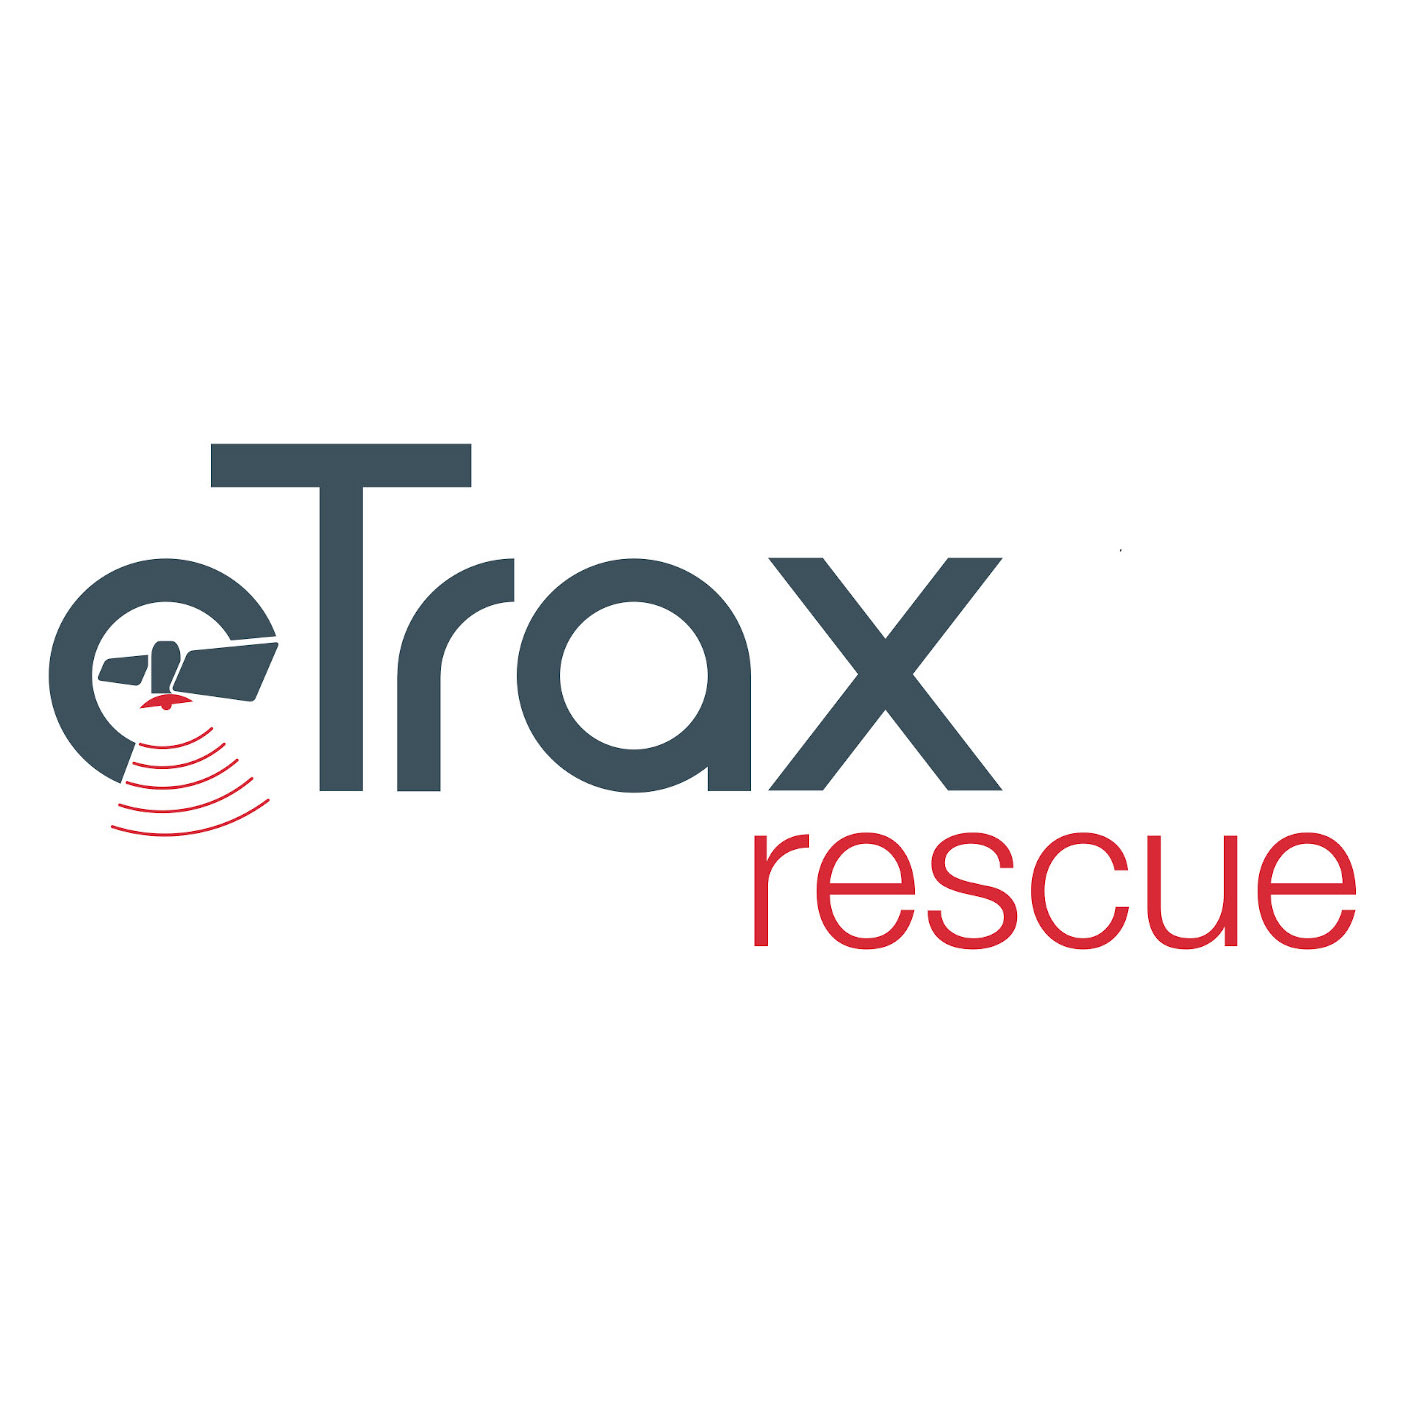 eTrax | rescue Logo